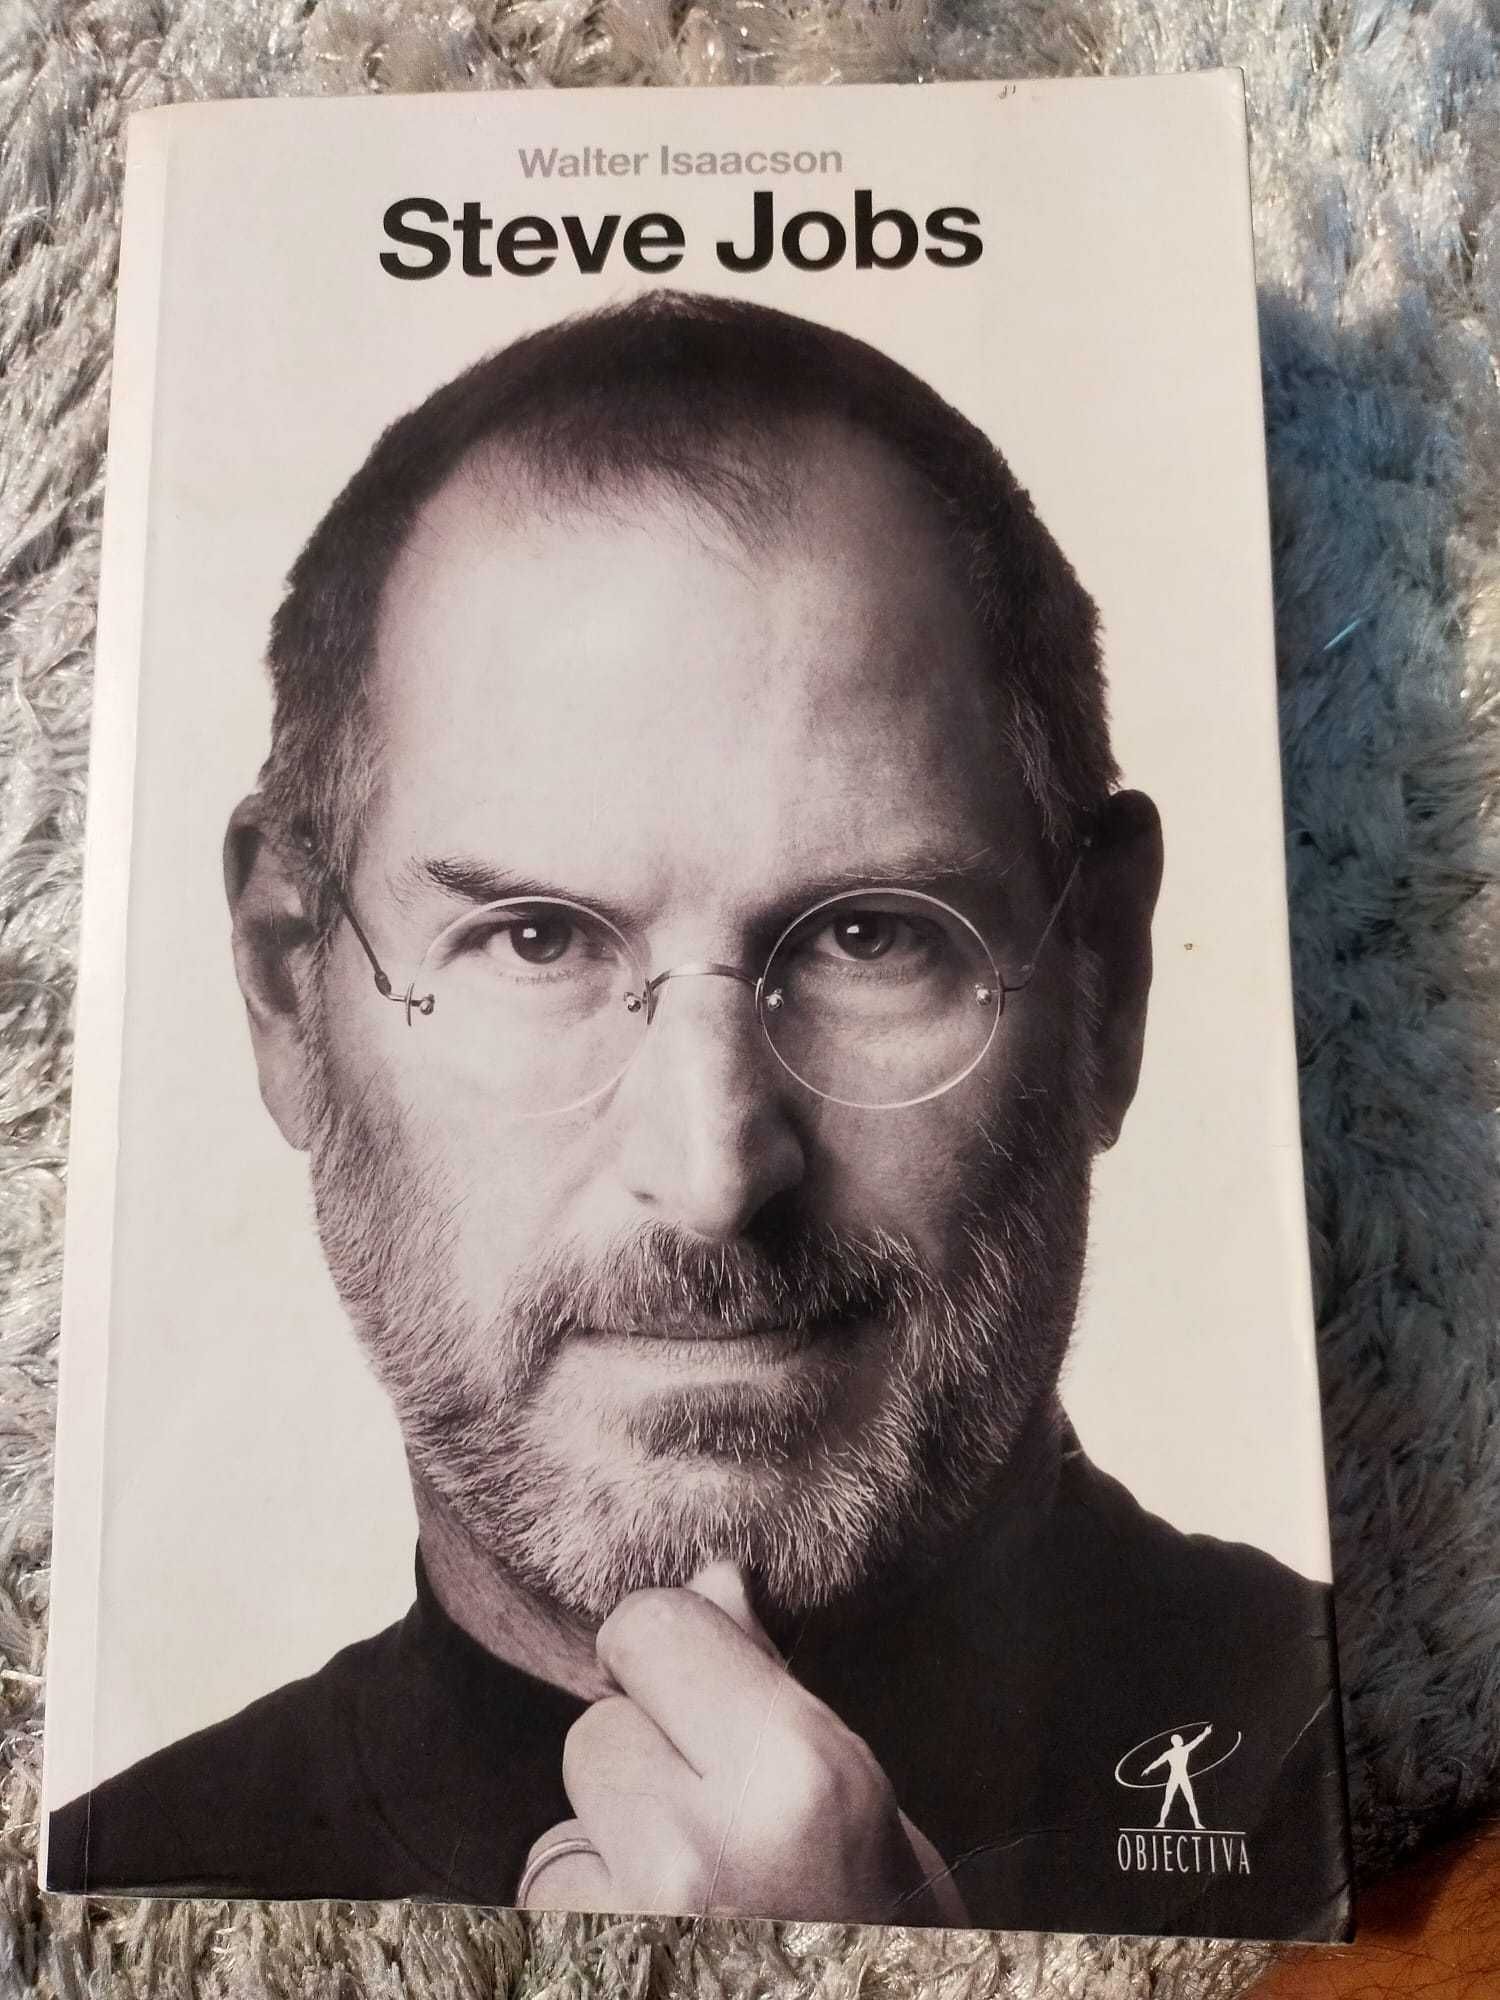 Steve Jobs - Biografia por Walter Isaacson